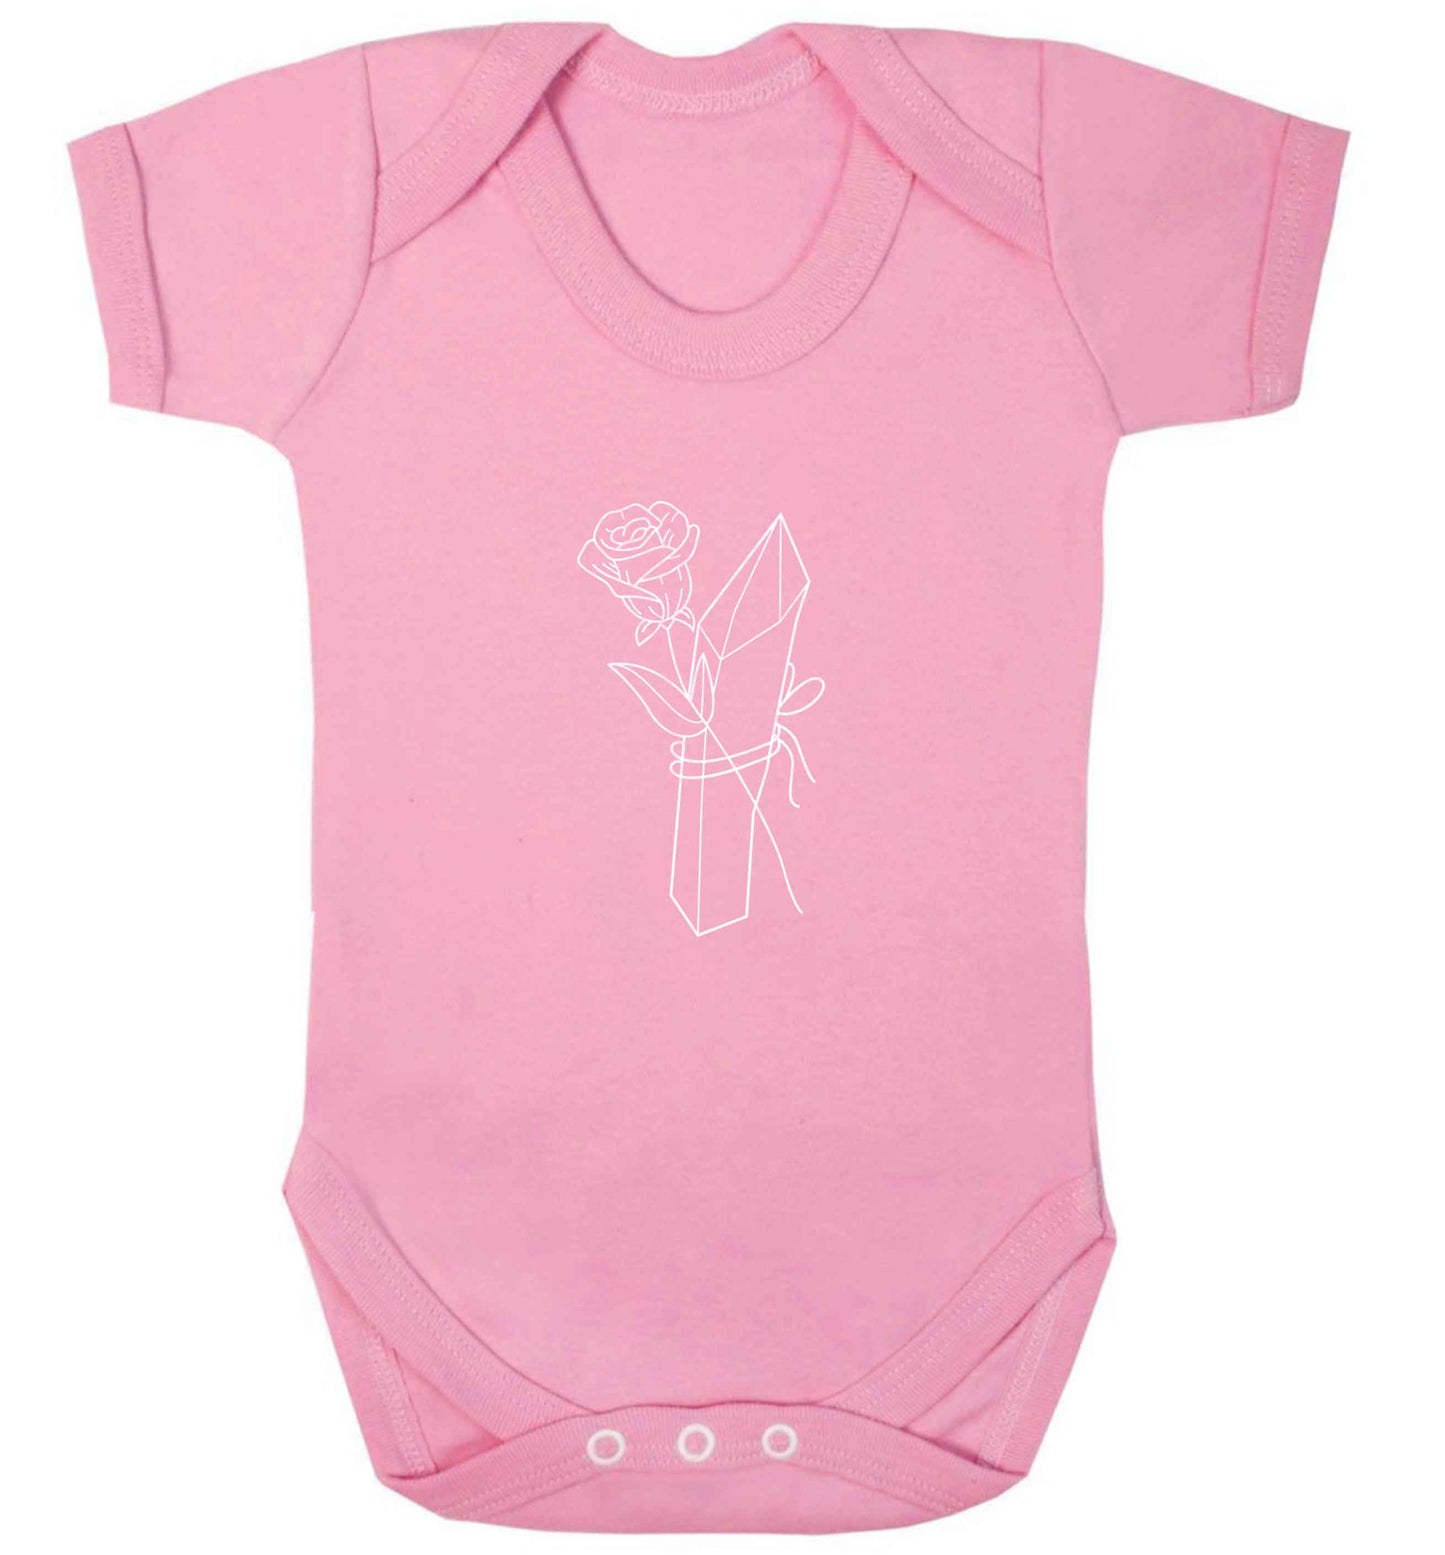 Rose crystal baby vest pale pink 18-24 months